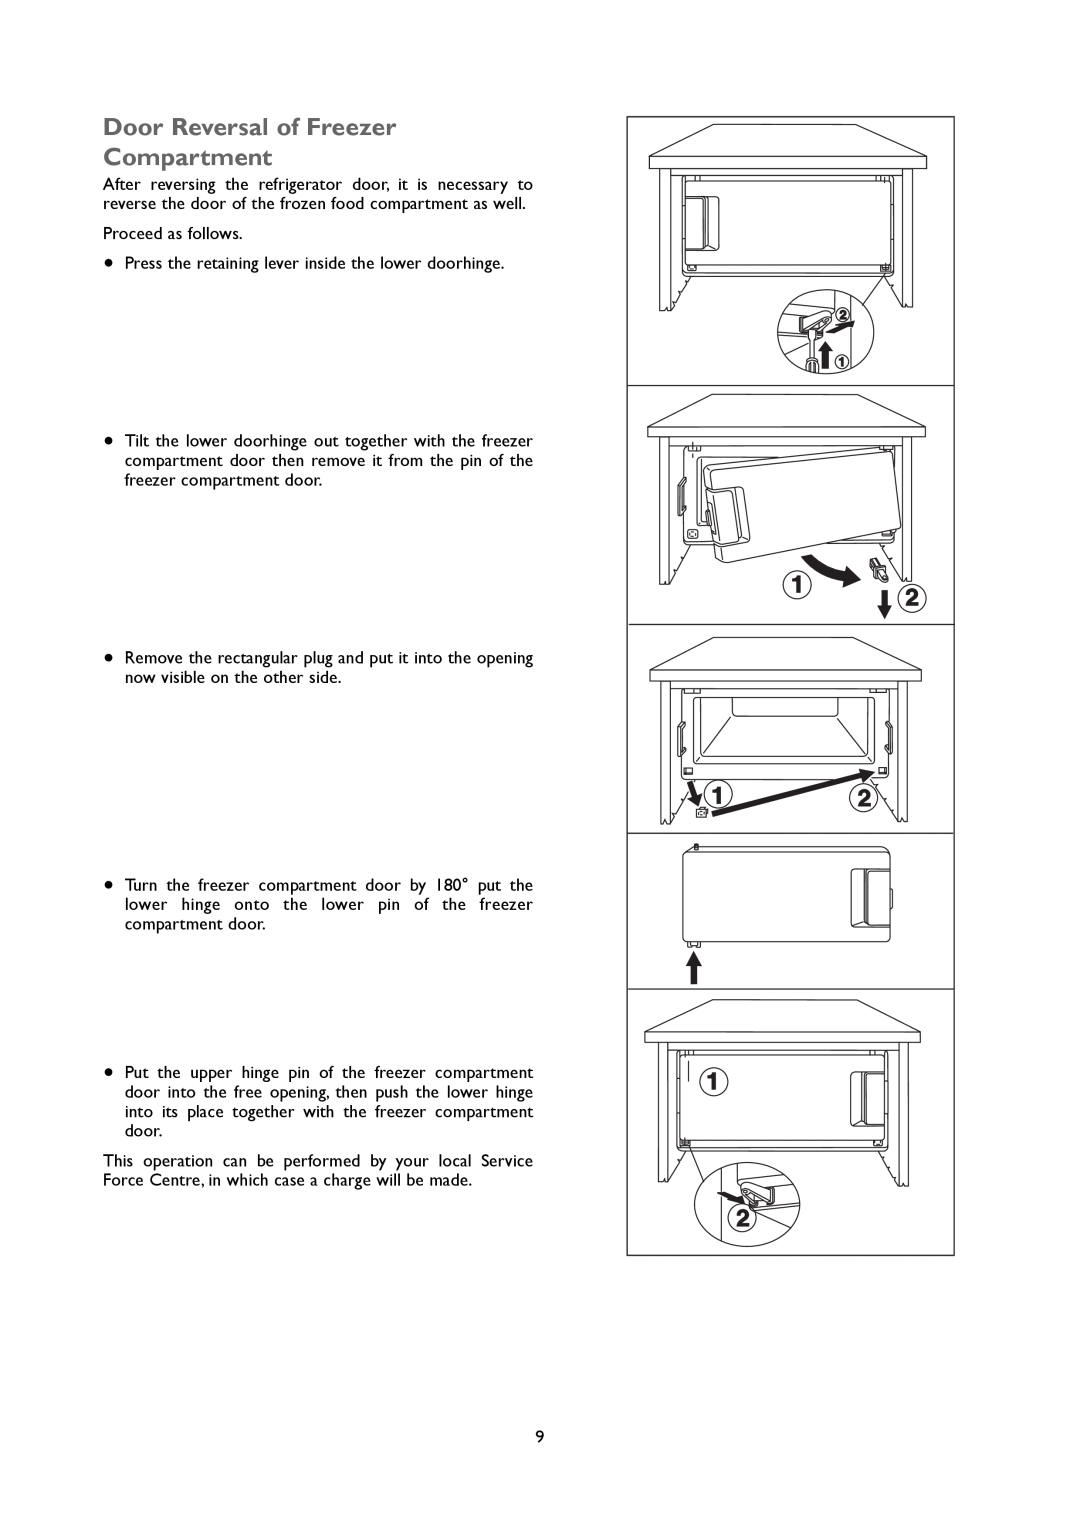 John Lewis JLUCFRW6001 instruction manual Door Reversal of Freezer Compartment 